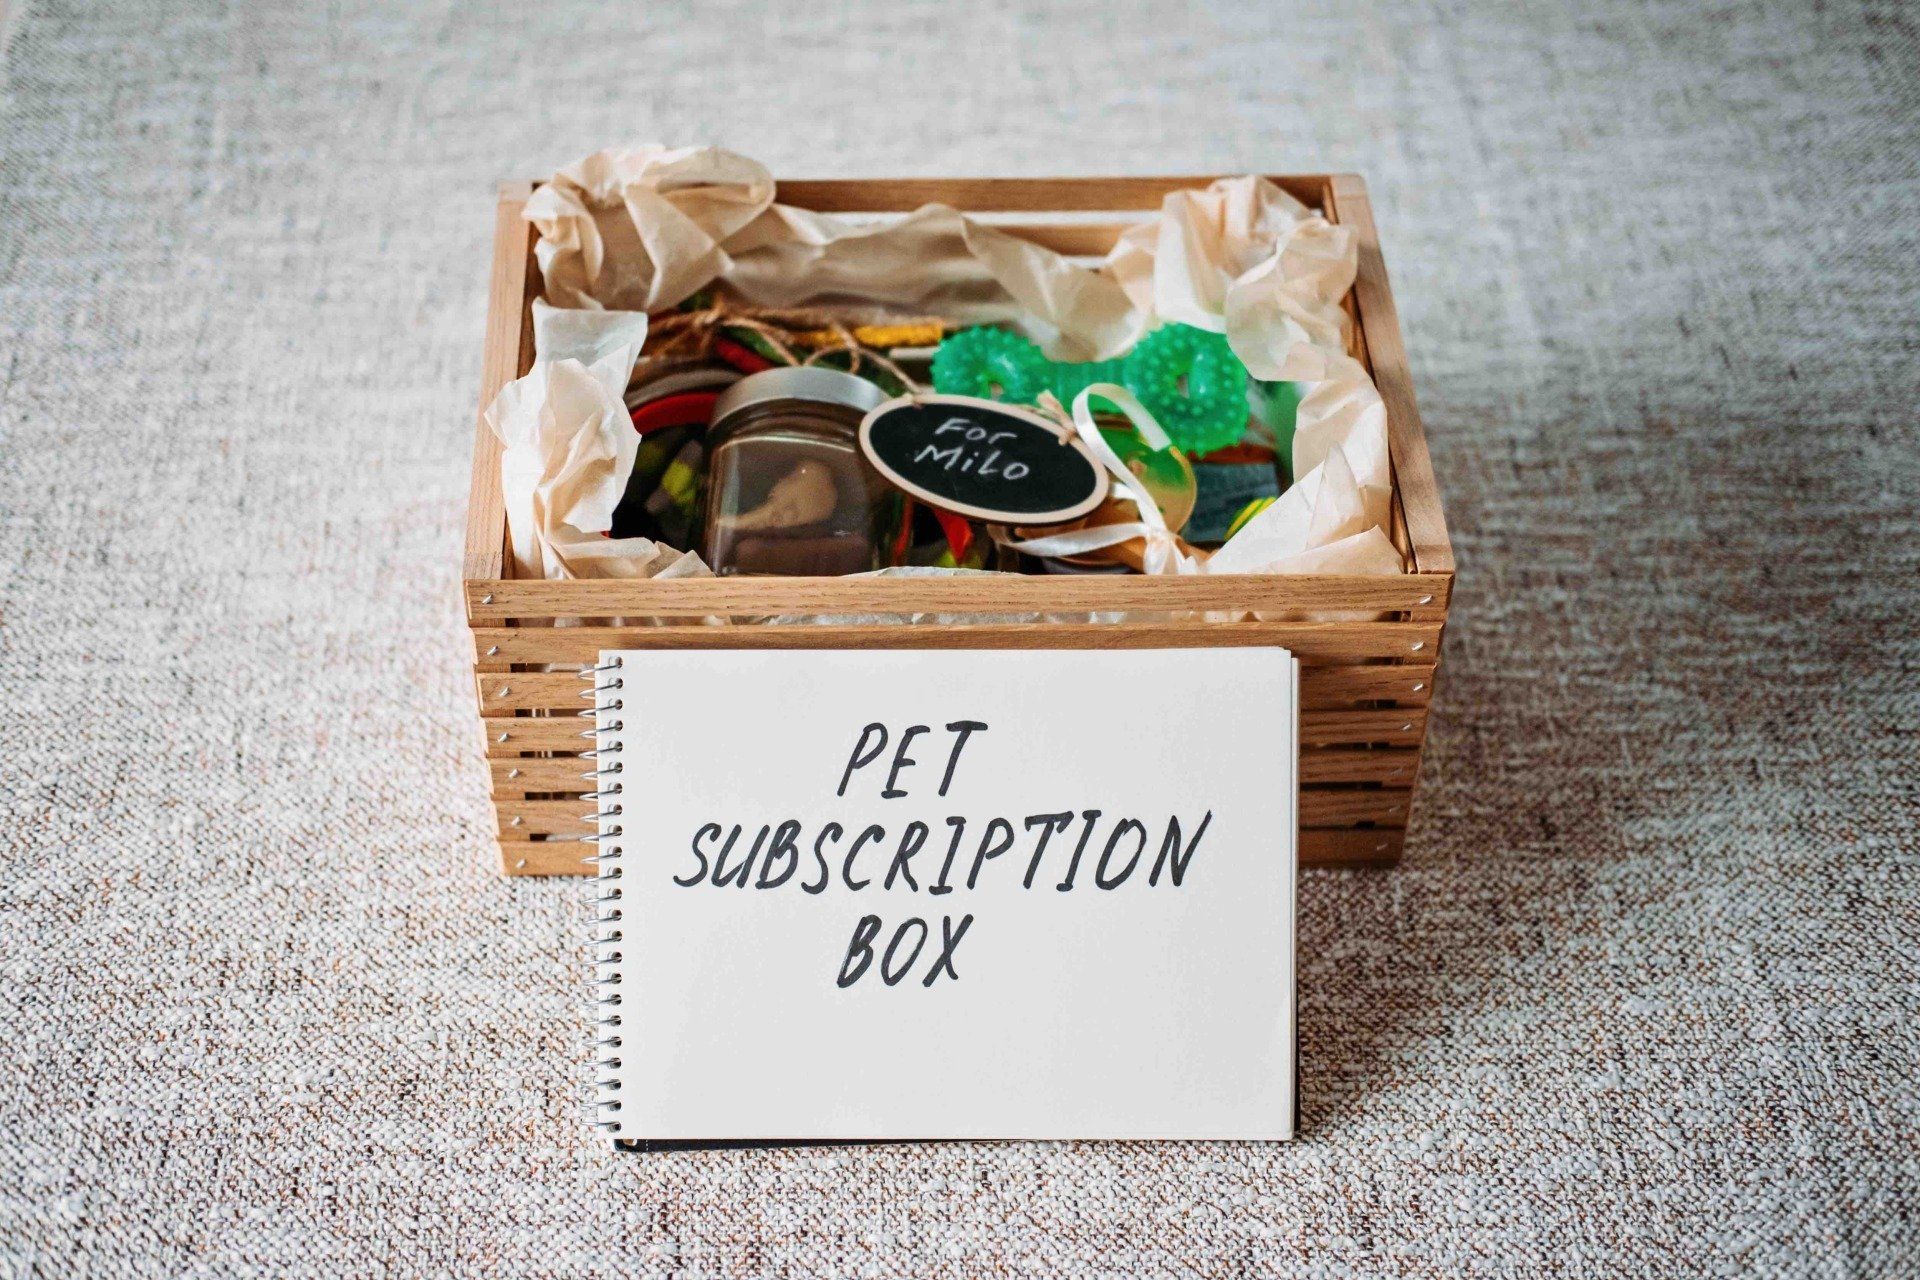 Use case: a subscription box seller.